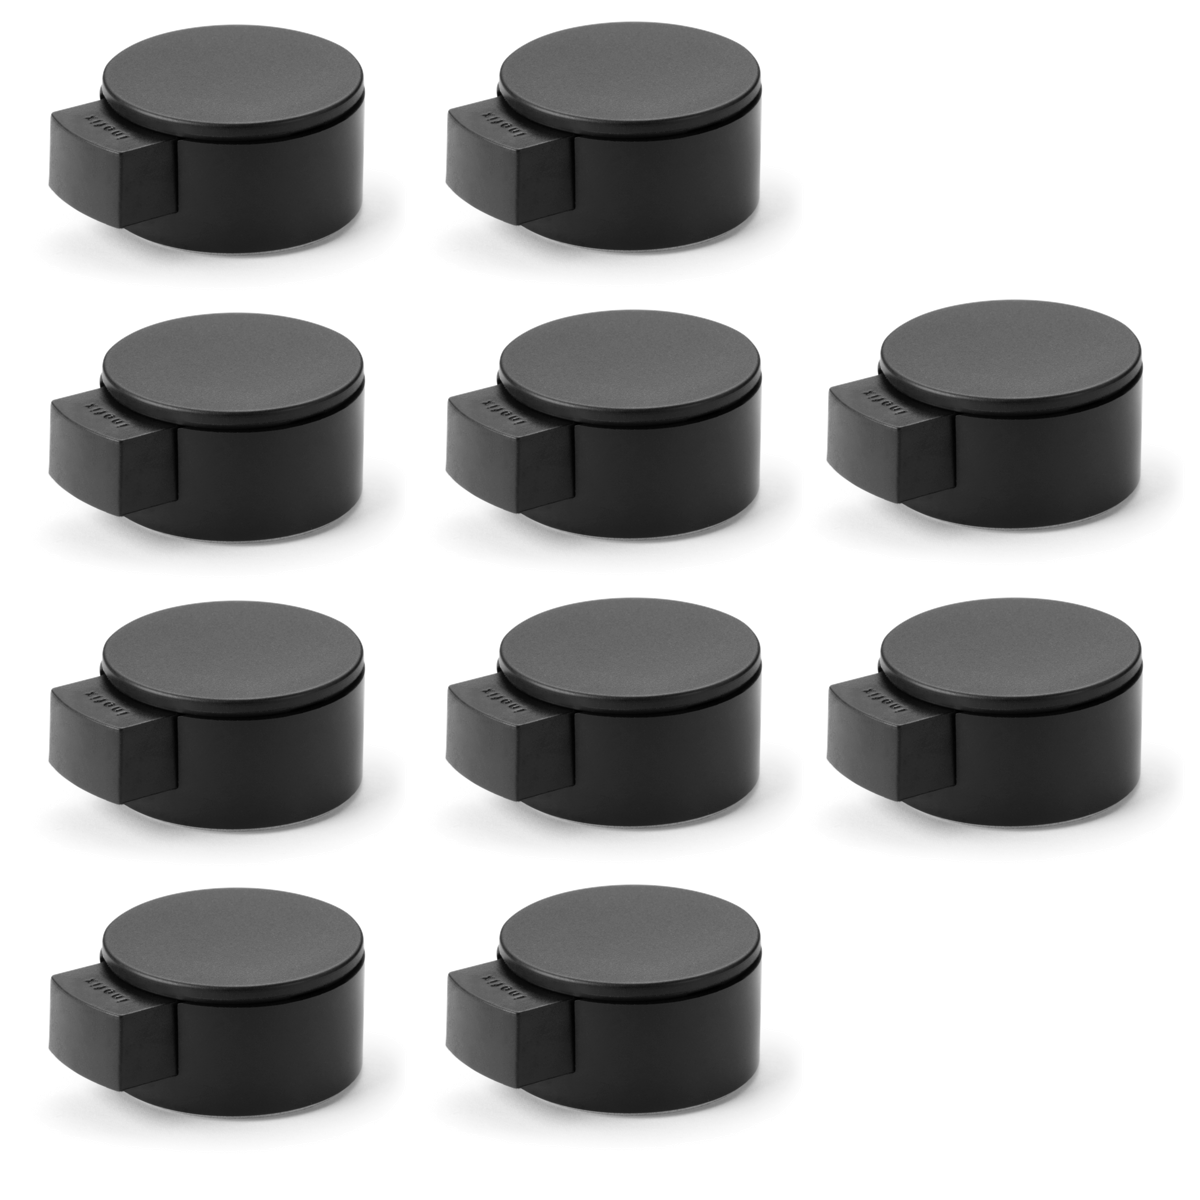 10 topes autoadhesivos de plástico acabado negro con mecanismo amortiguante